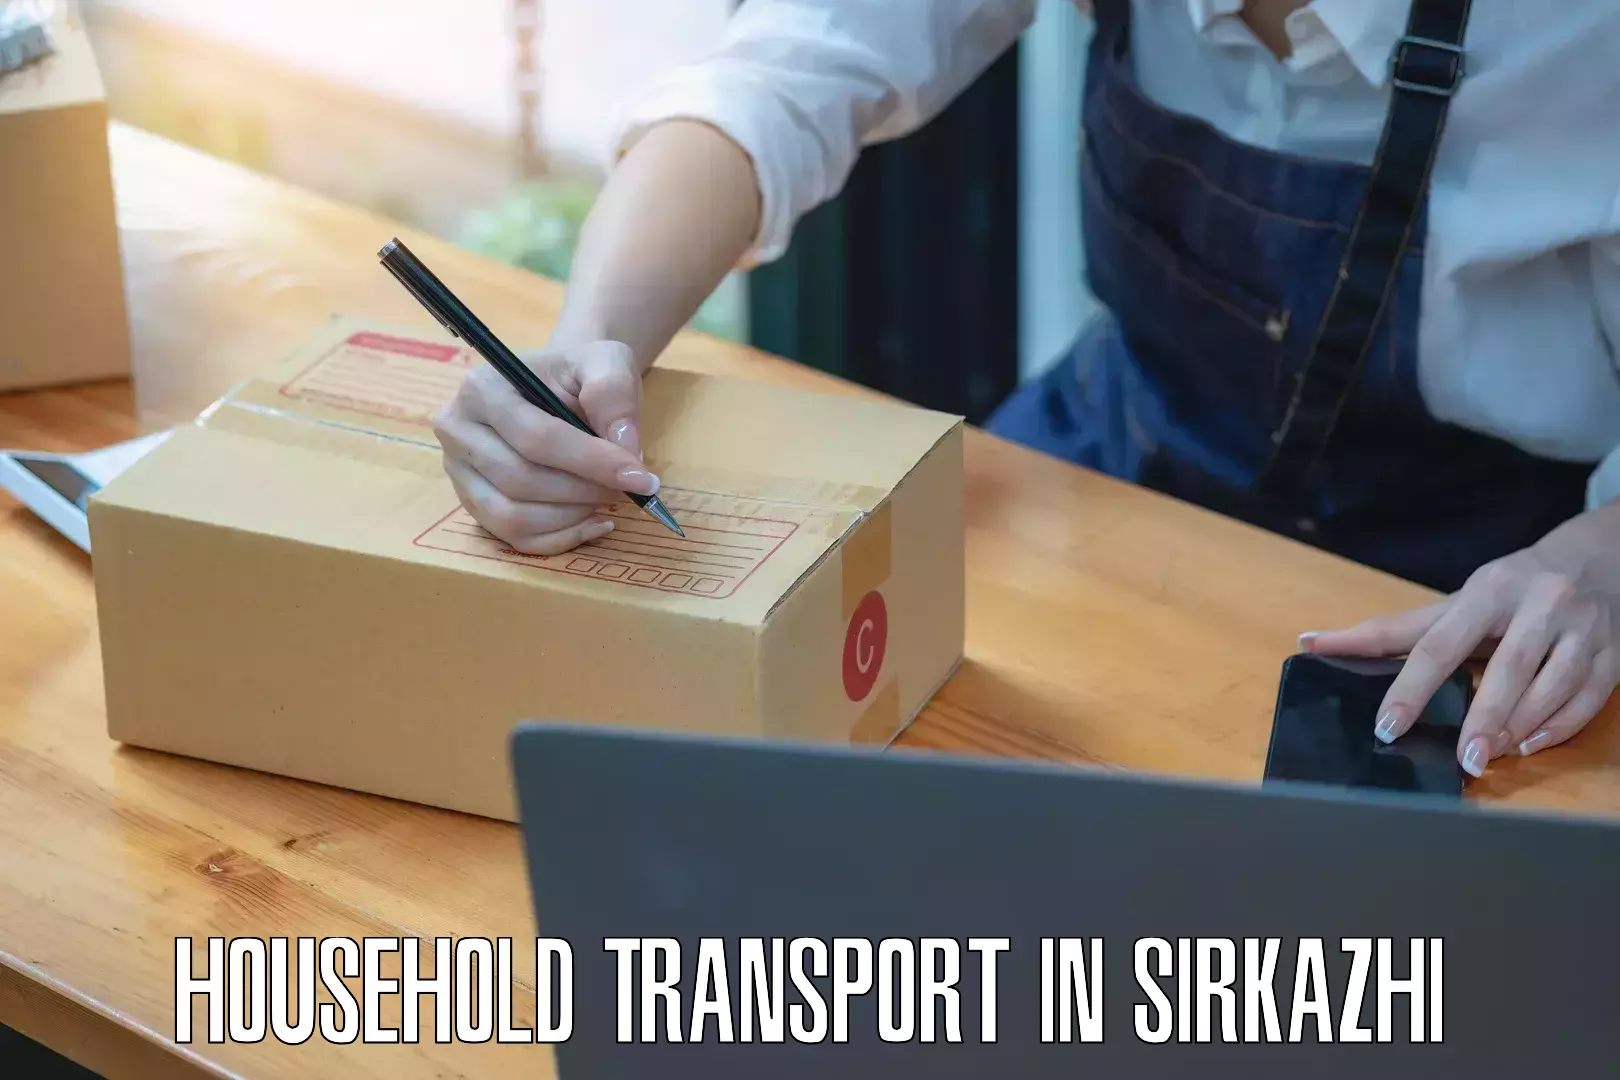 Household transport services in Sirkazhi